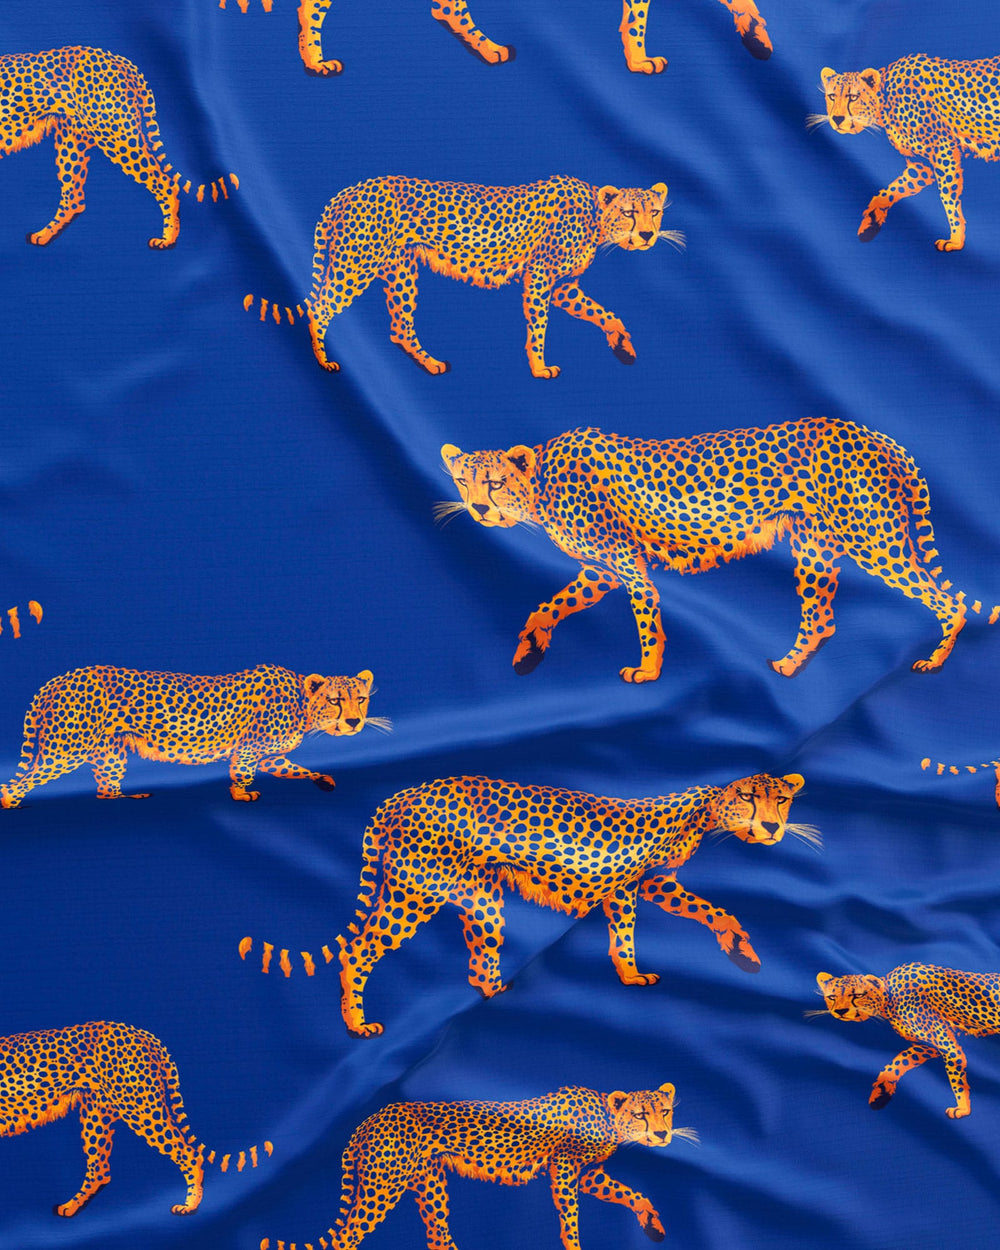 Women's sleepshirt blue with cheetahs